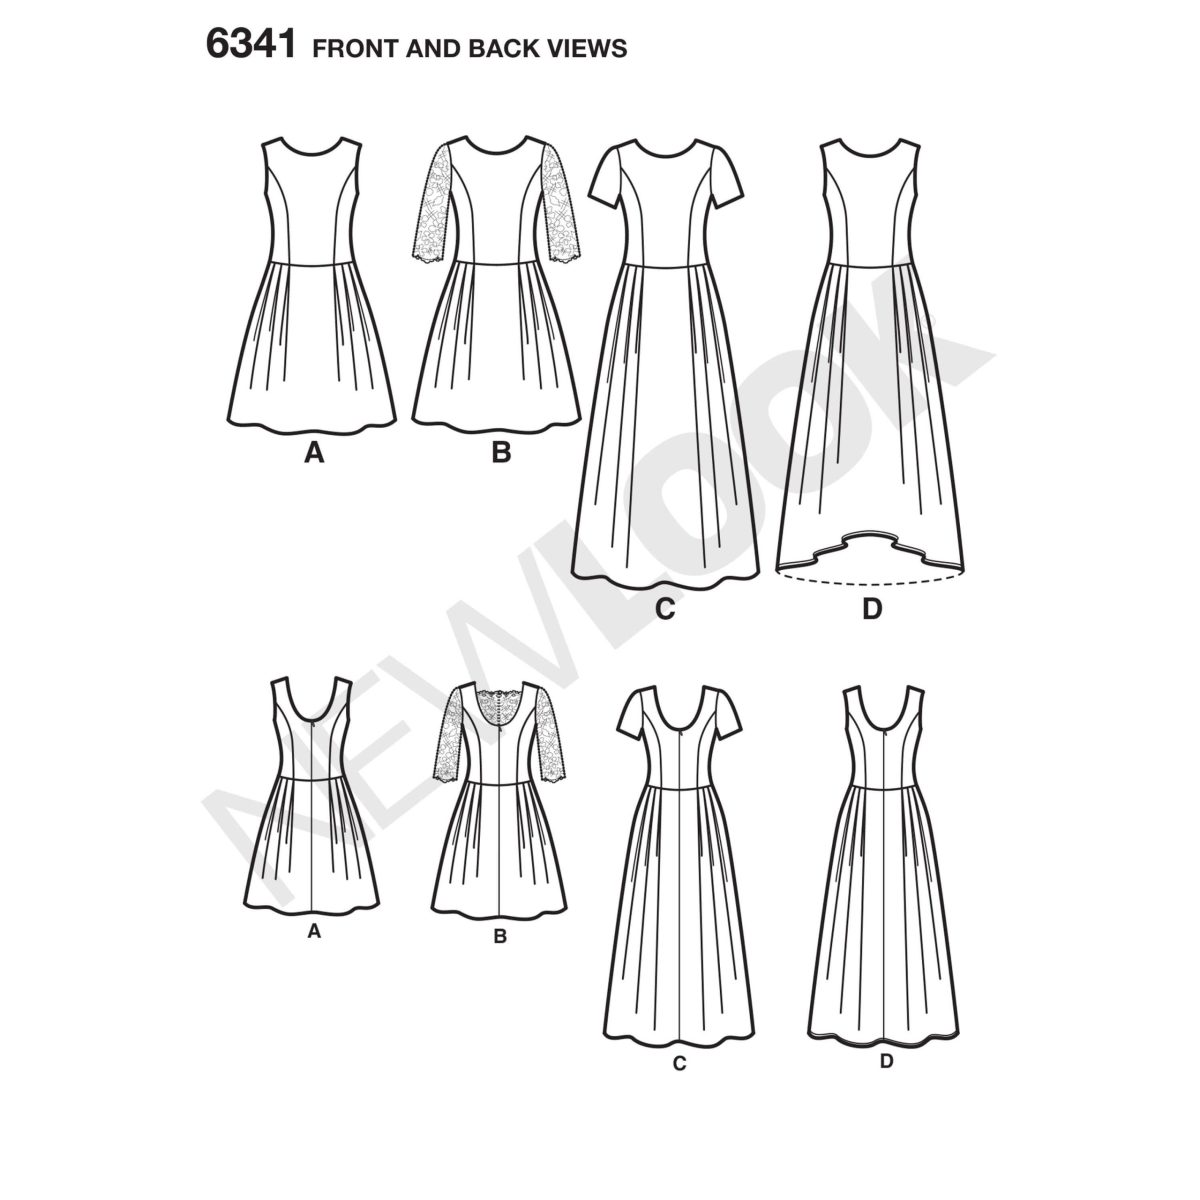 New Look Sewing Pattern N6341 Misses' Dress in Three Lengths